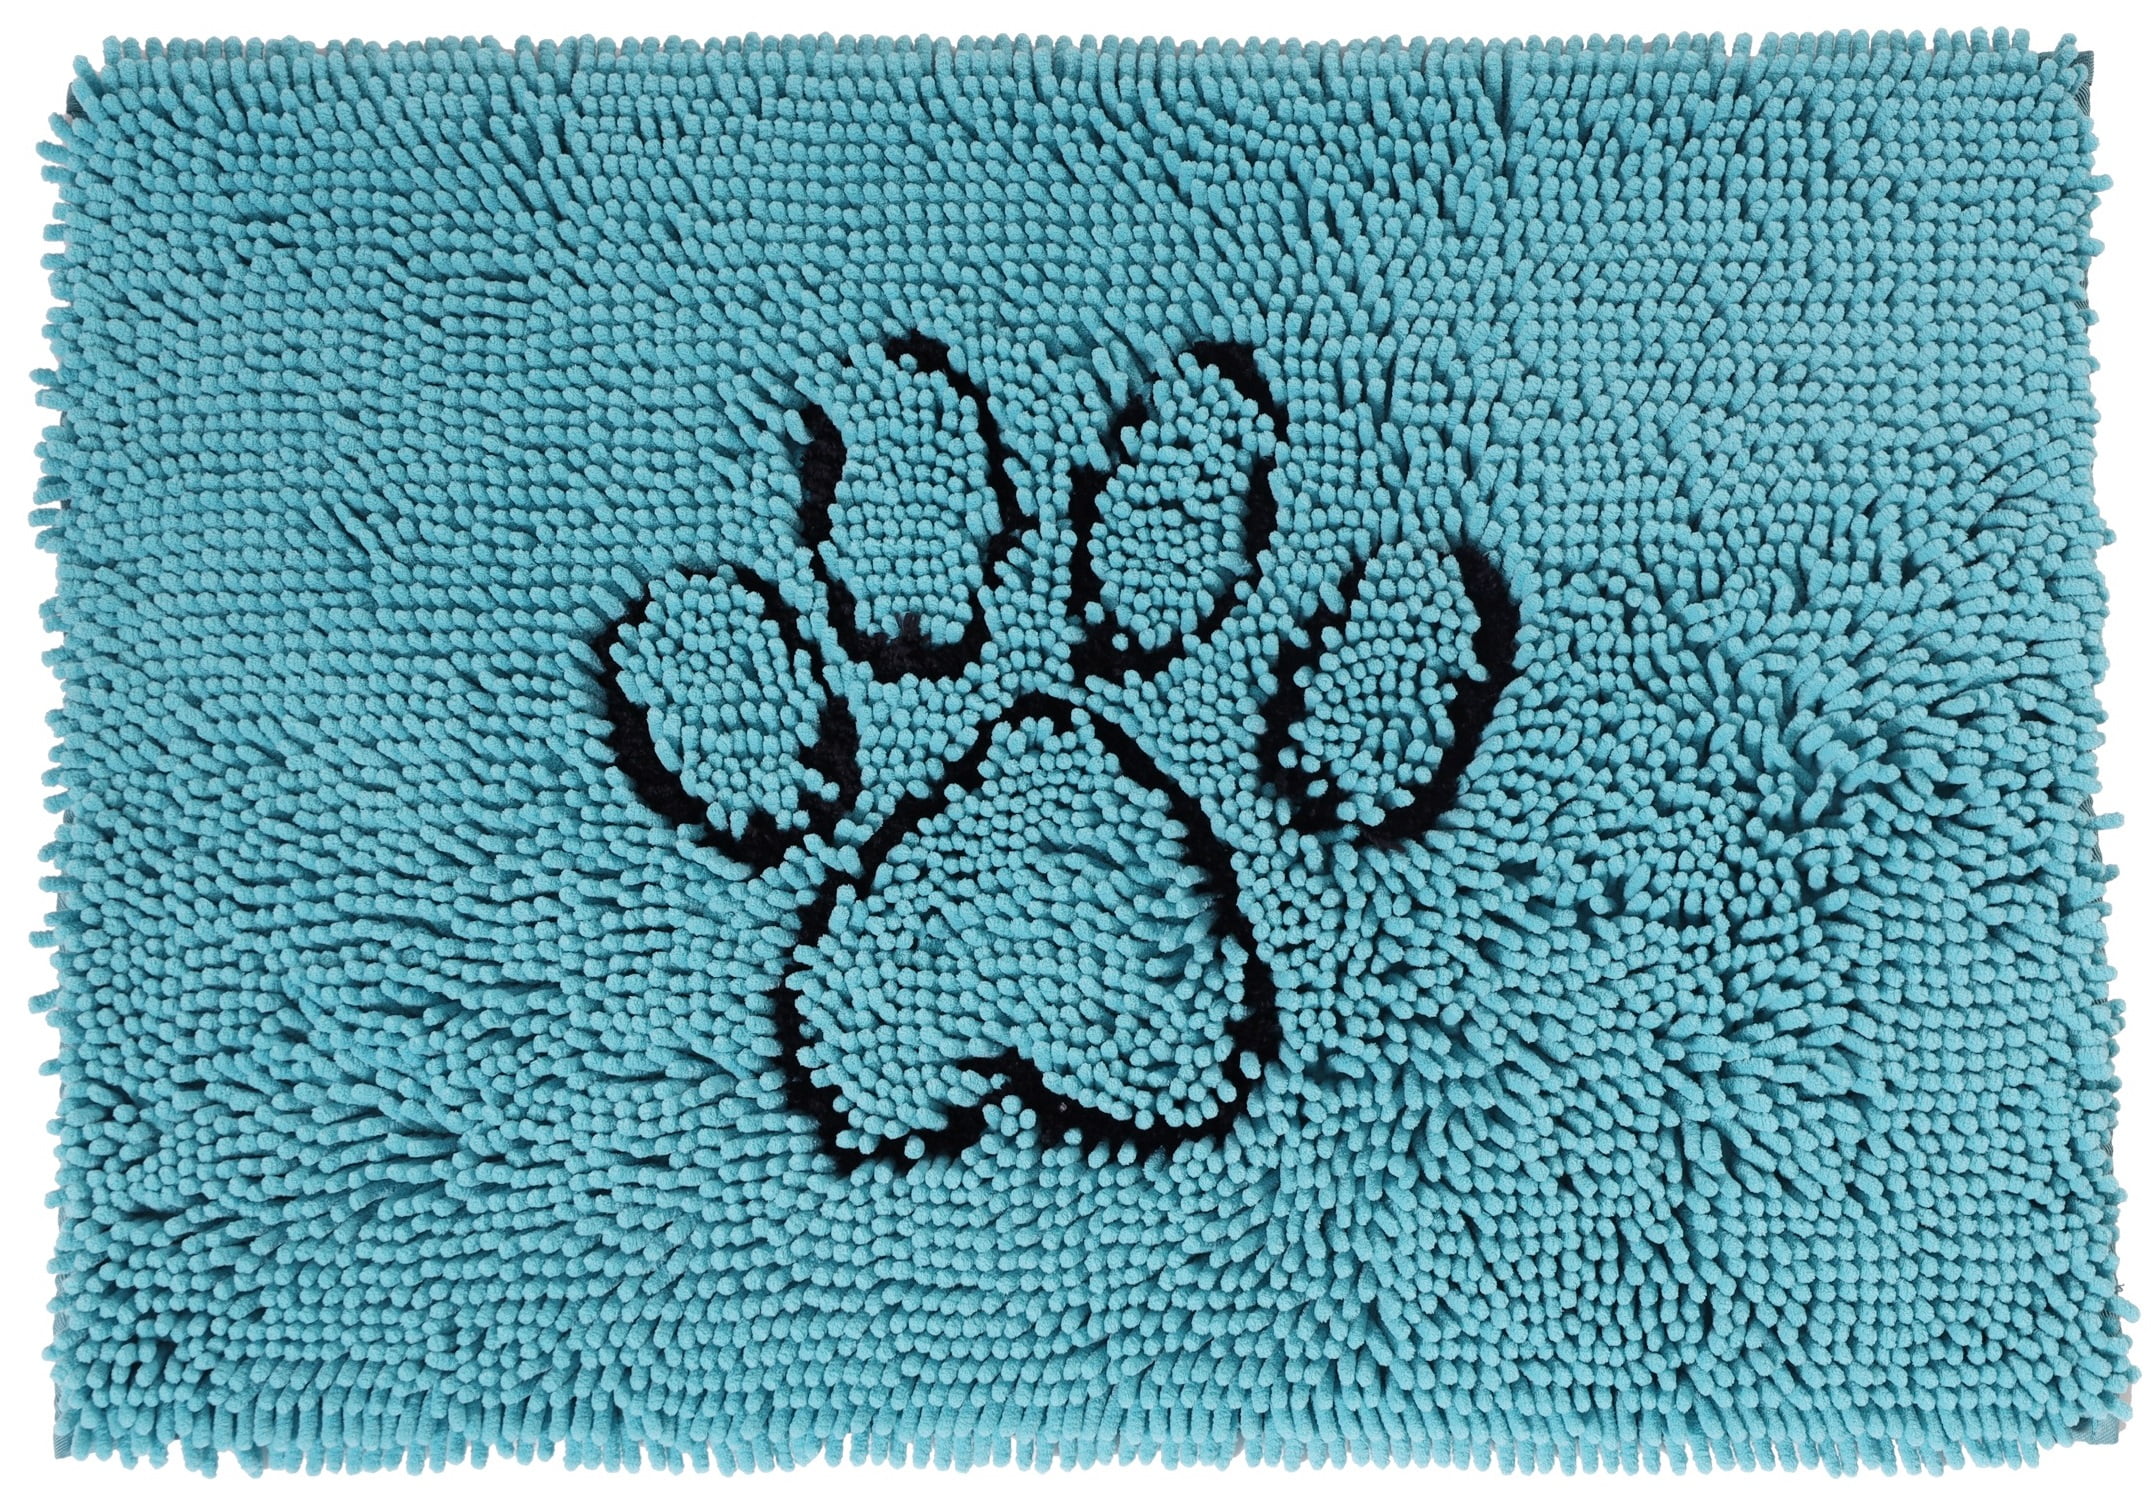  HOMEIDEAS Absorbent Door Mat, Chenille Soft Washable Dog  Welcome Rug for Entryway, Front Muddy Doormat (Beige, 20x32) : Pet  Supplies